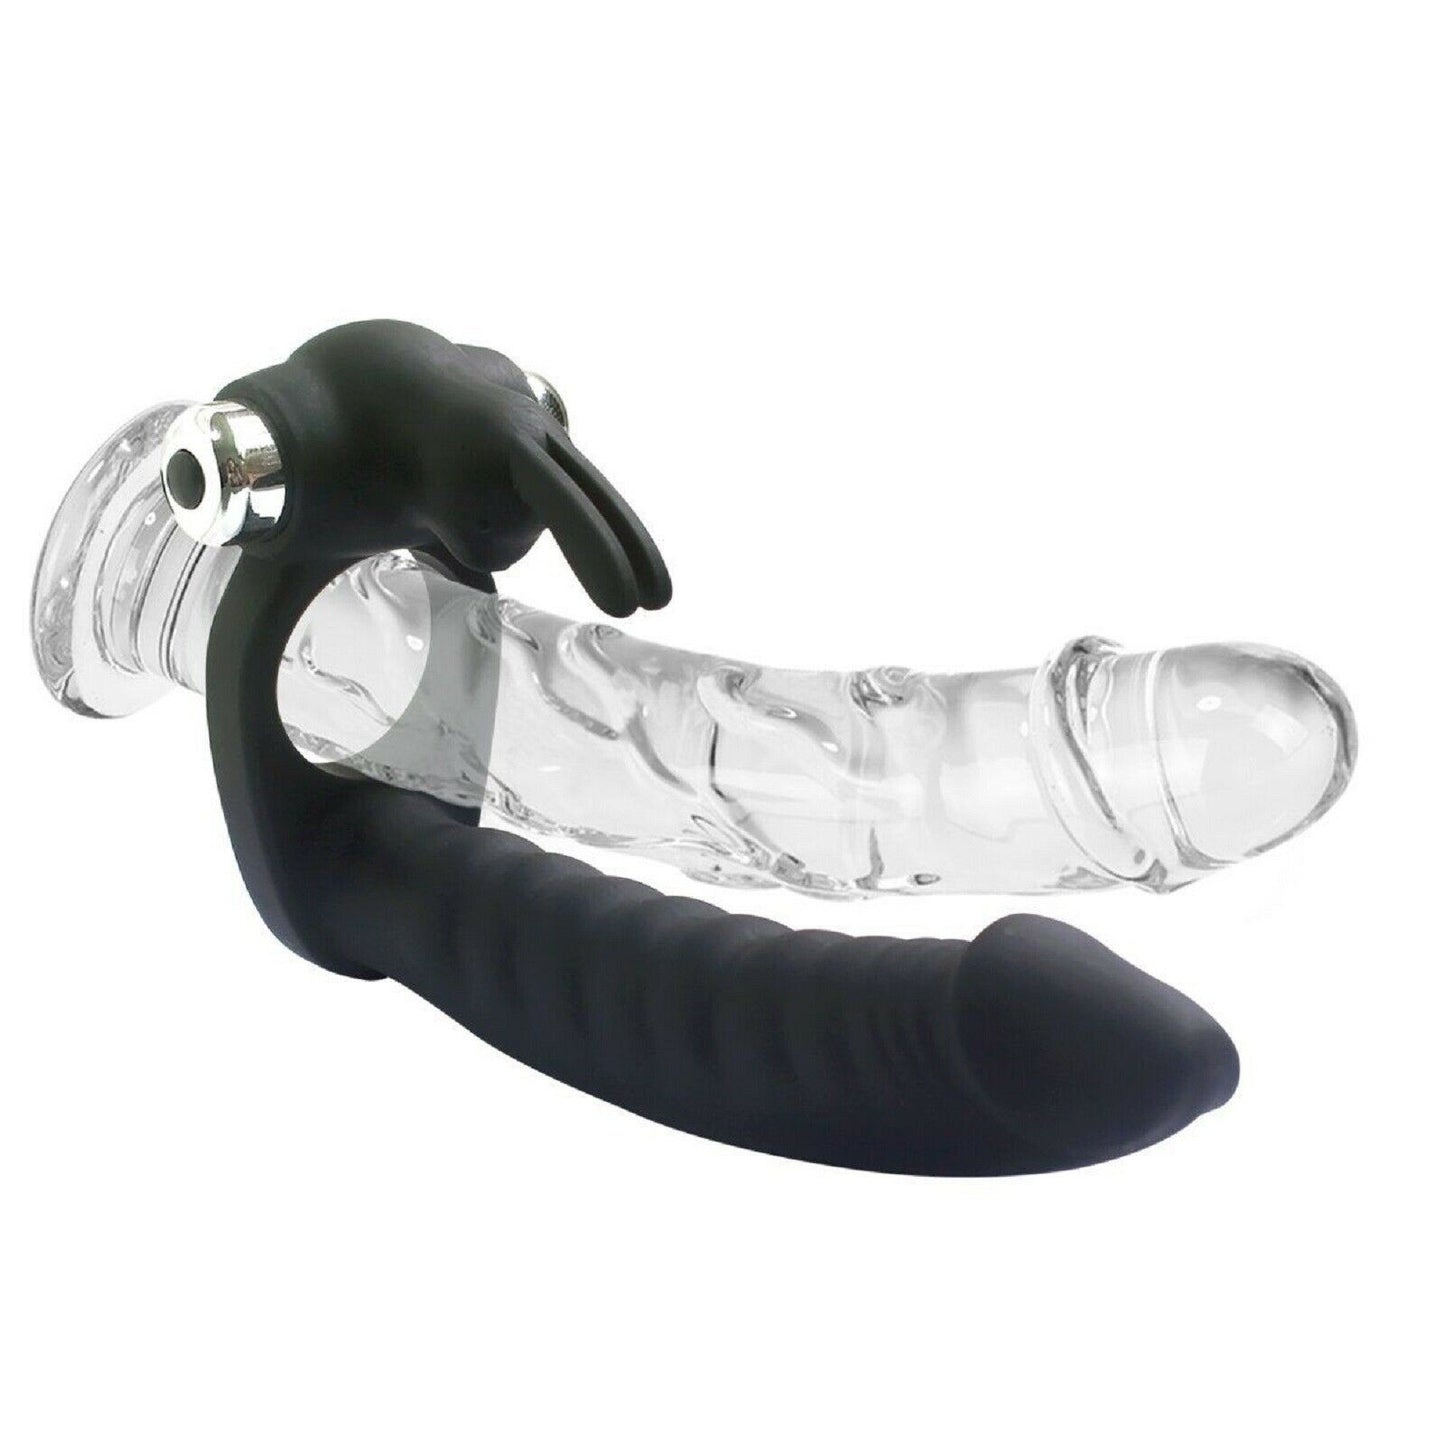 Vibrating Double Penetrator Penetration Cock Ring Dildo Anal Couples Sex Toy